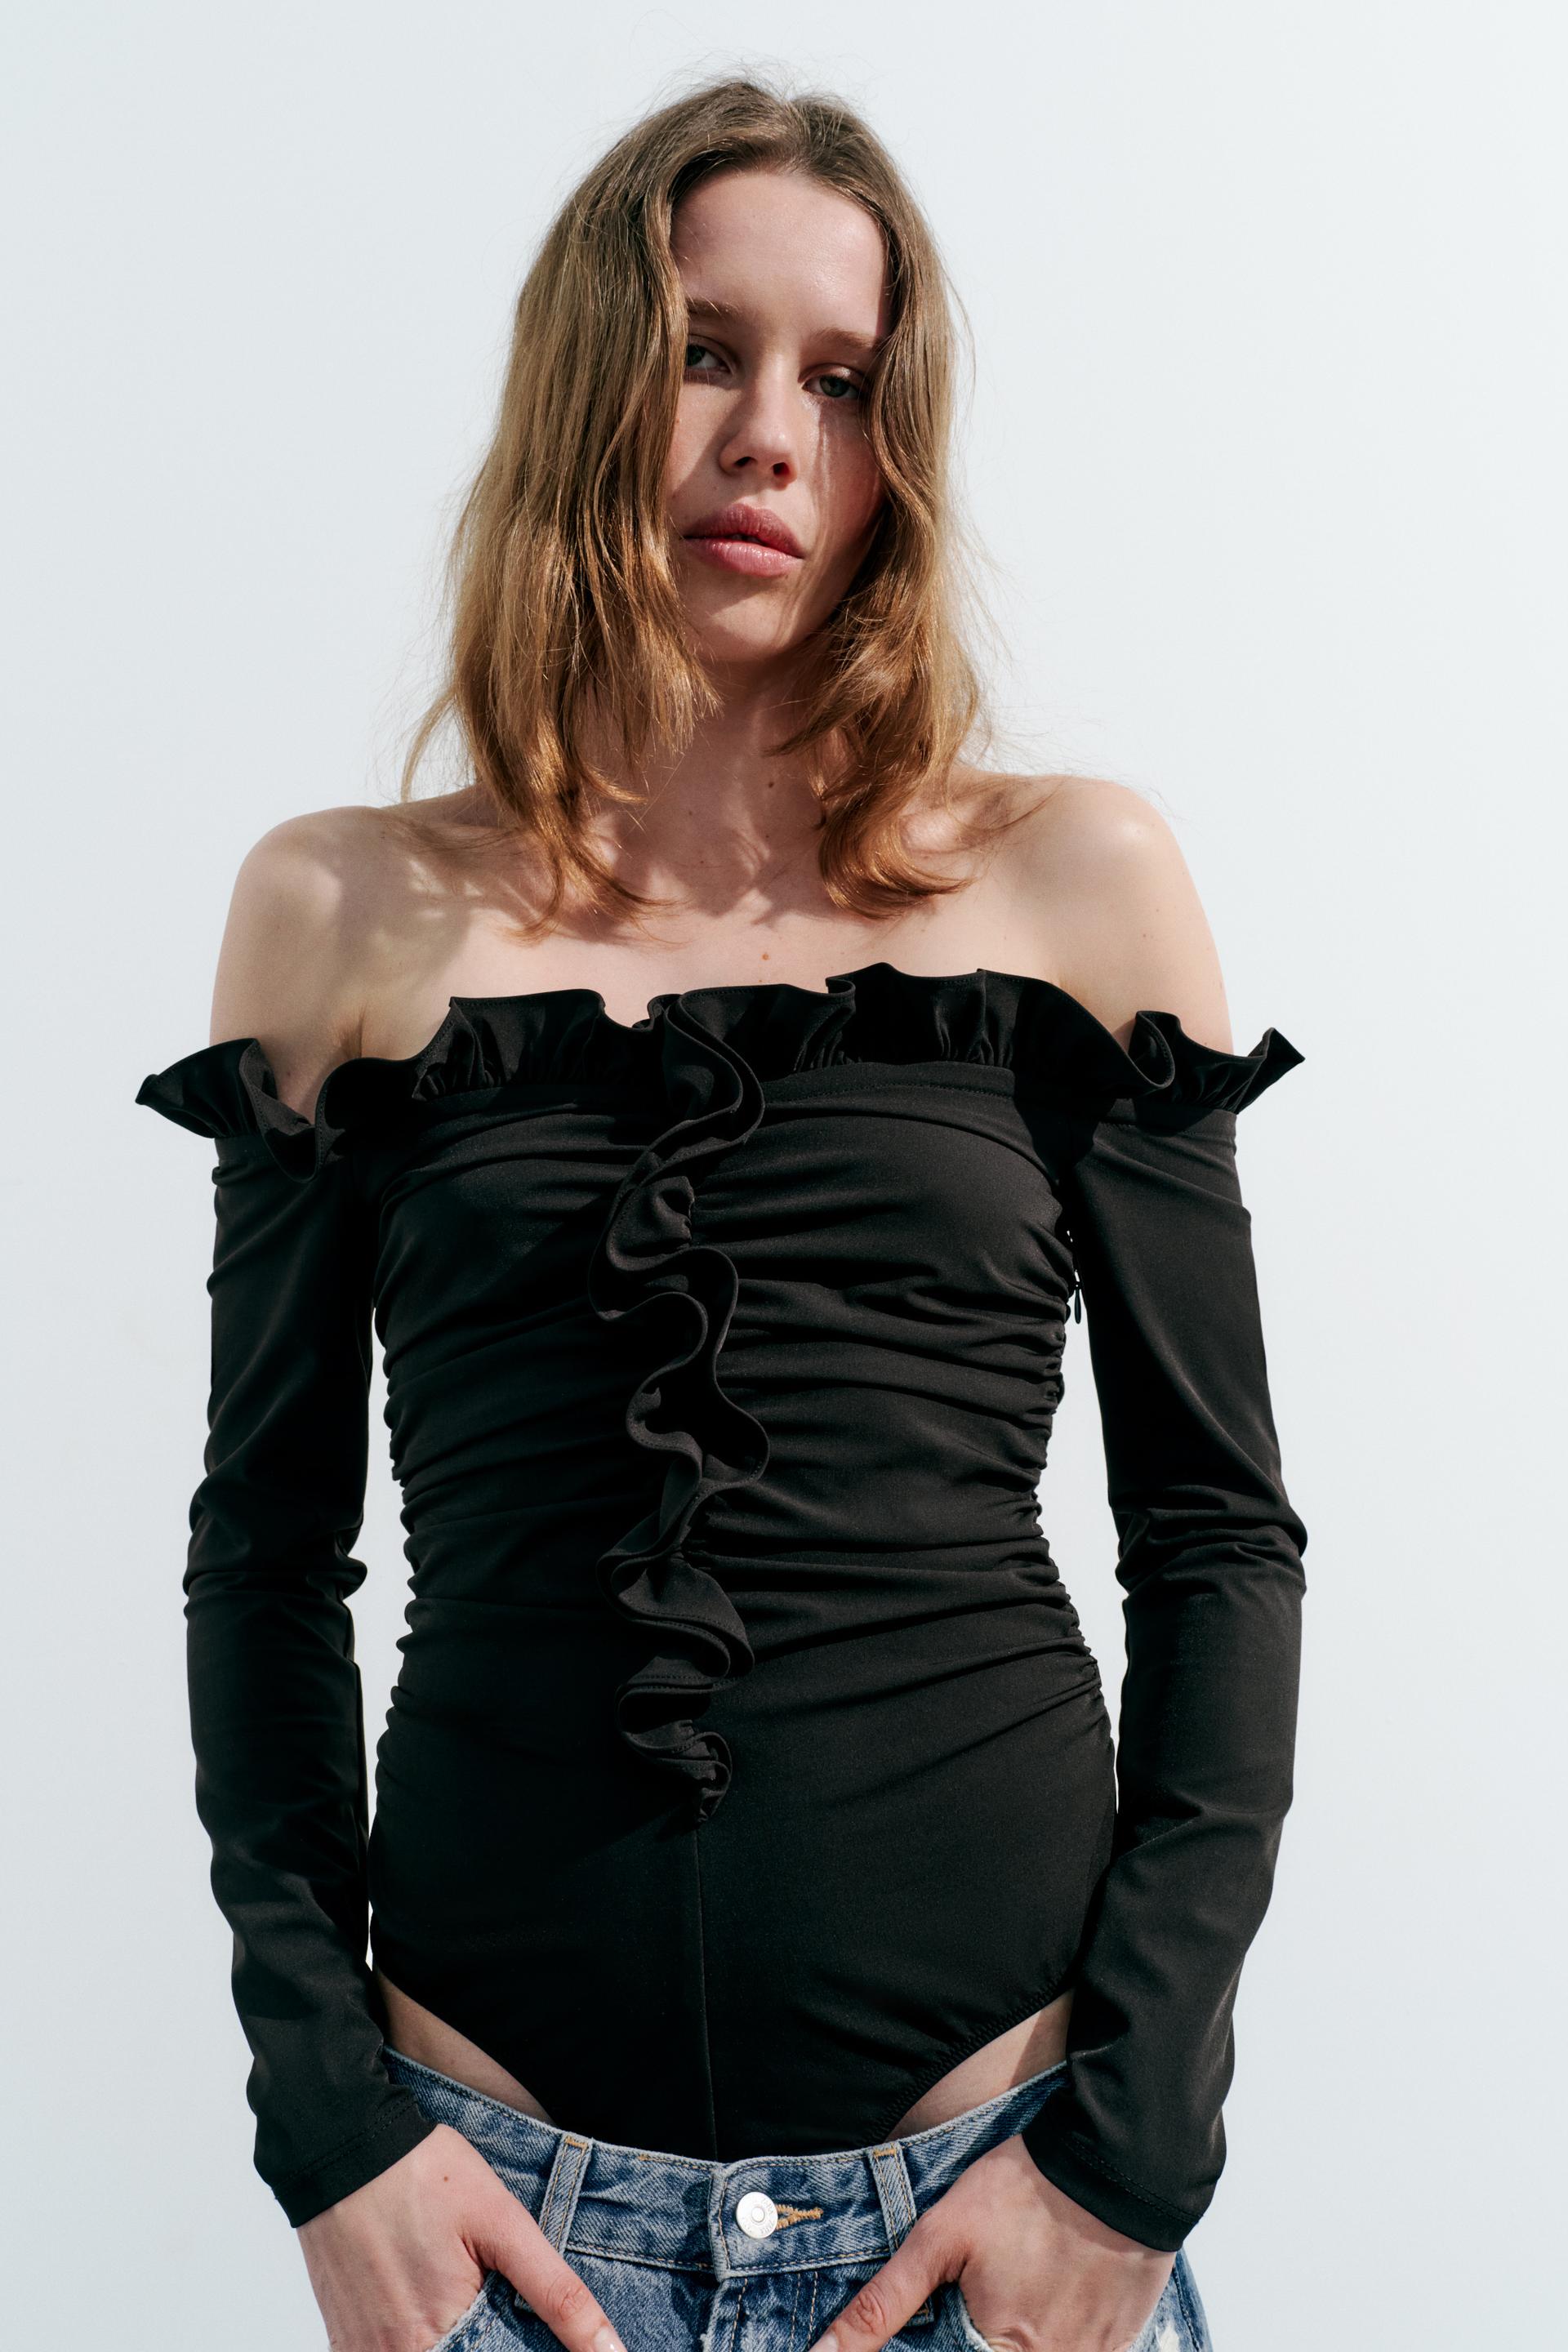 Lululemon Align Bodysuit Black Size 4 - $47 (46% Off Retail) - From sara